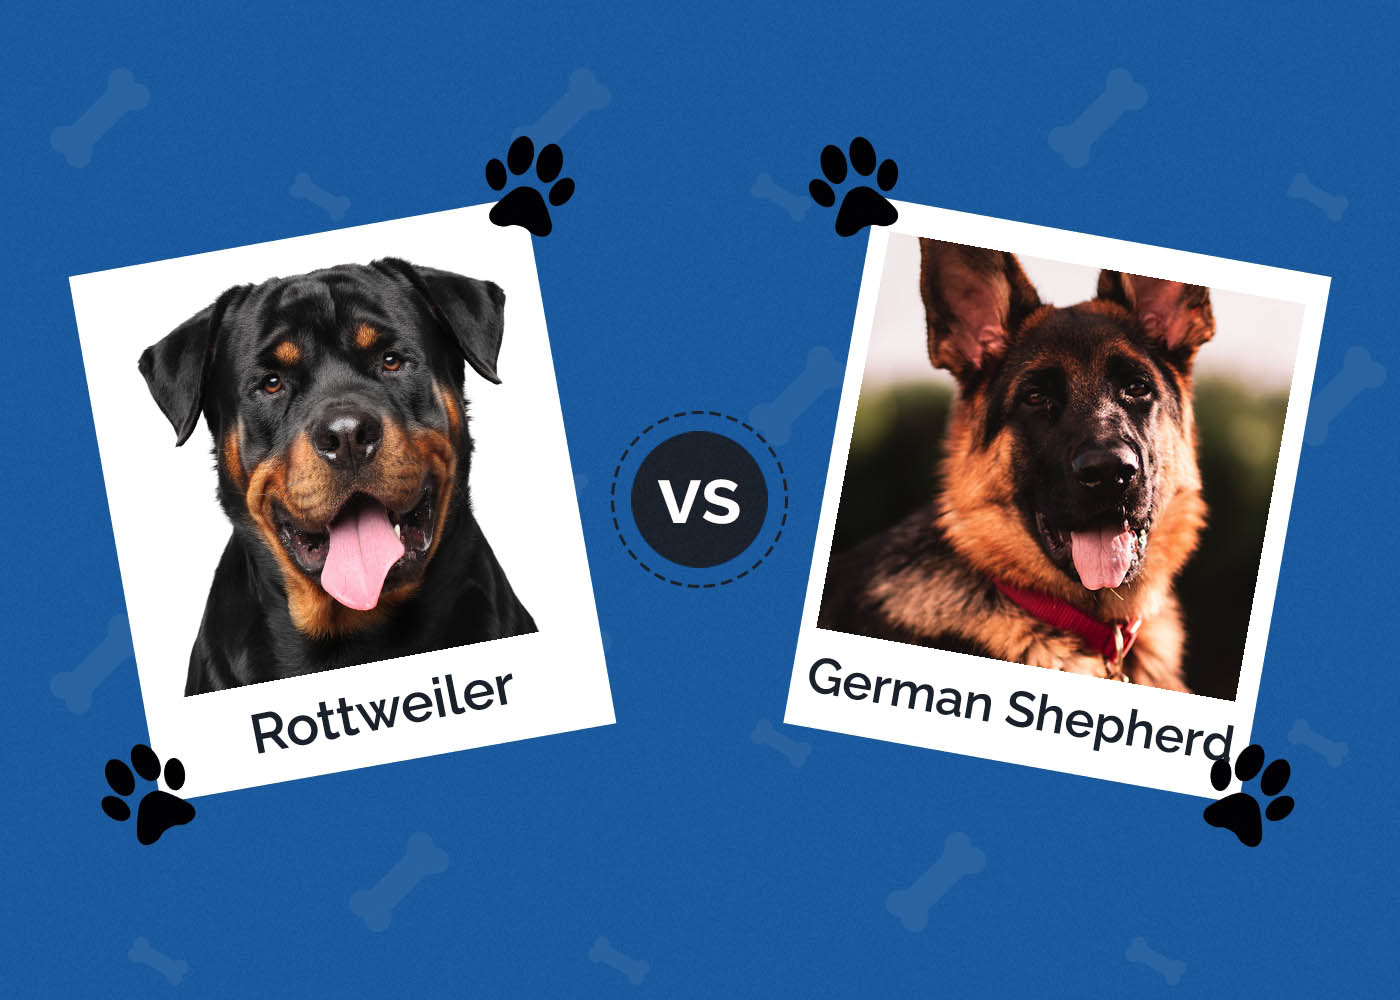 Rottweiler vs German Shepherd